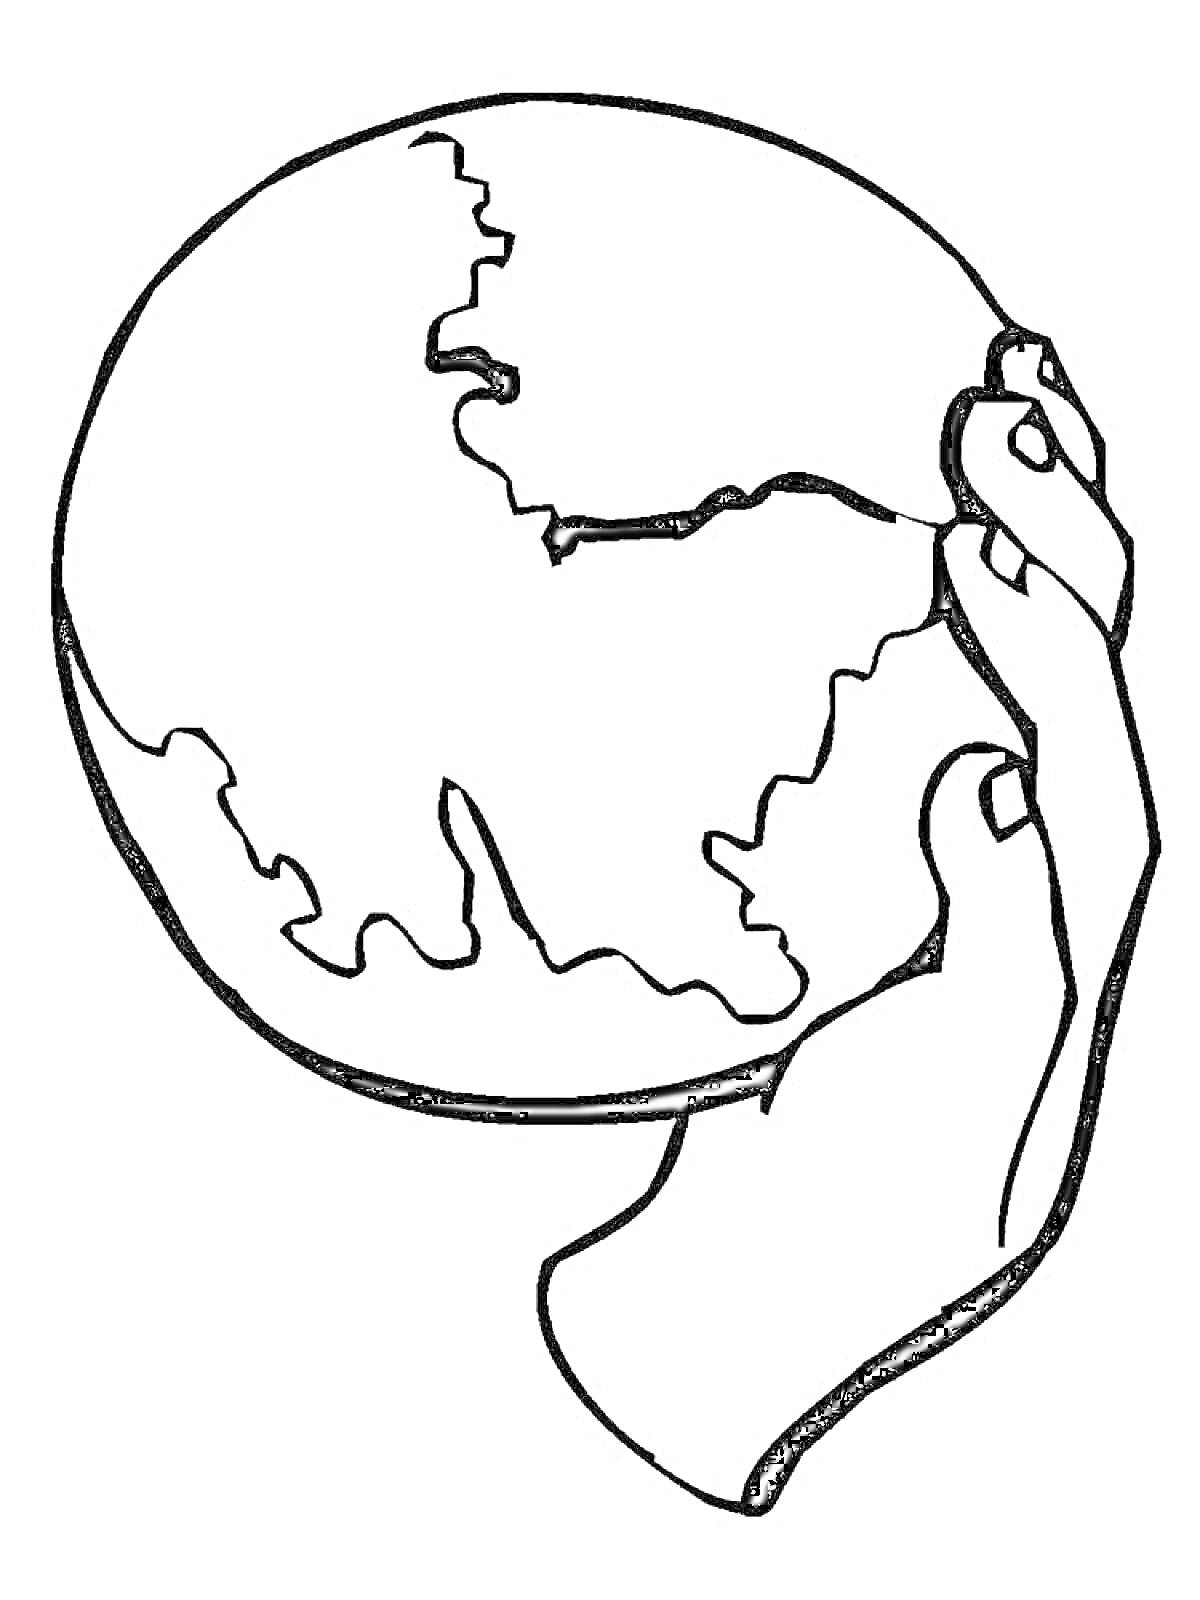 Раскраска Две руки держат земной шар